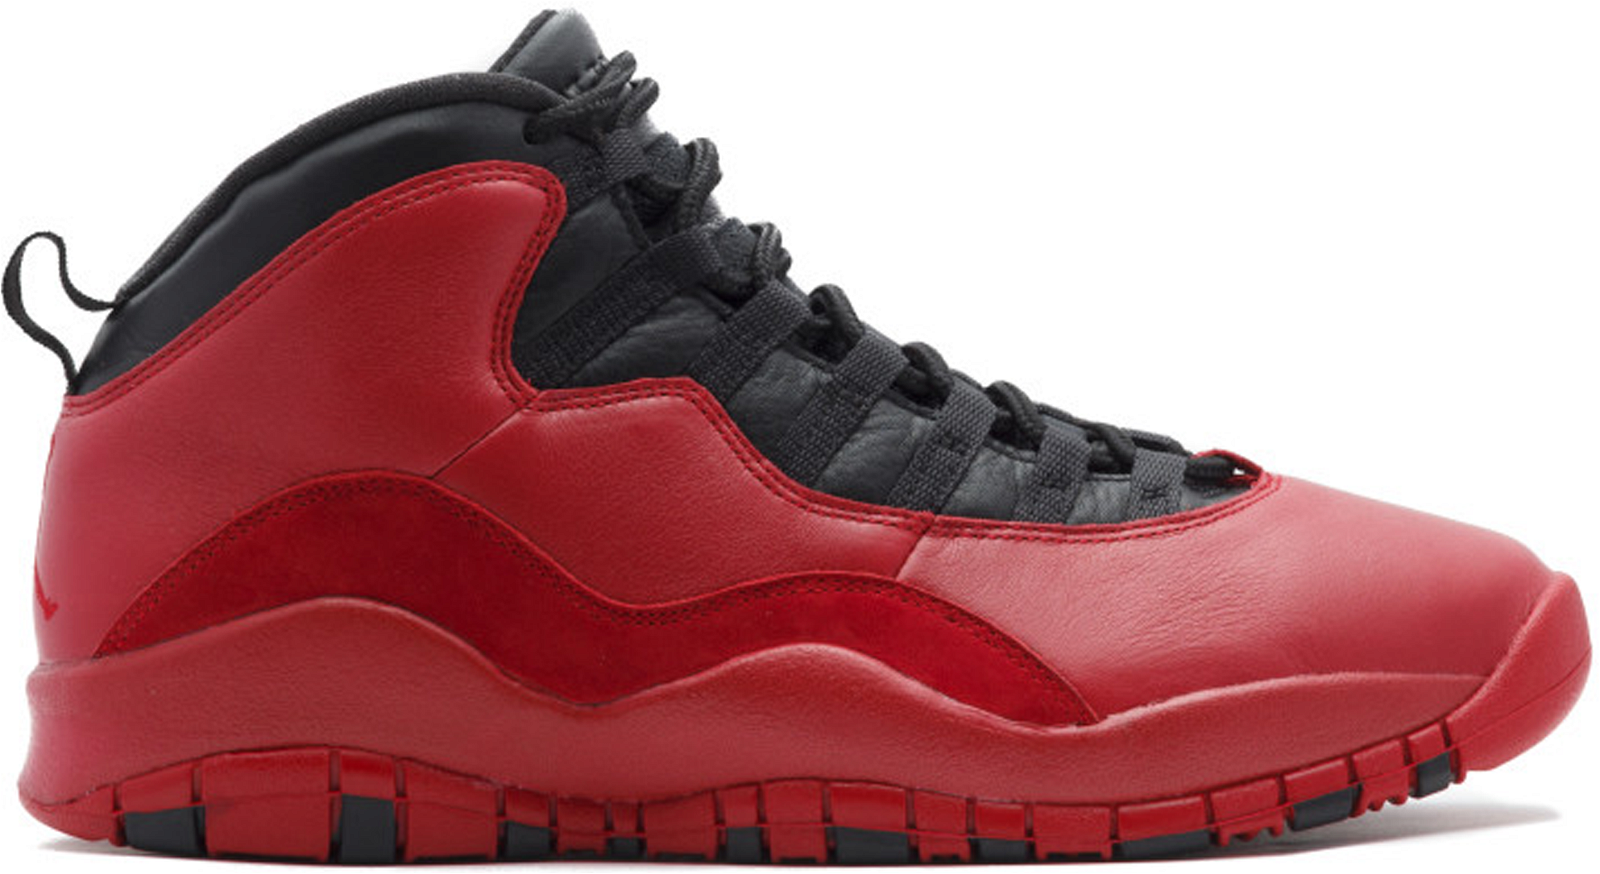 Jordan 10 Retro PSNY Red sneakers